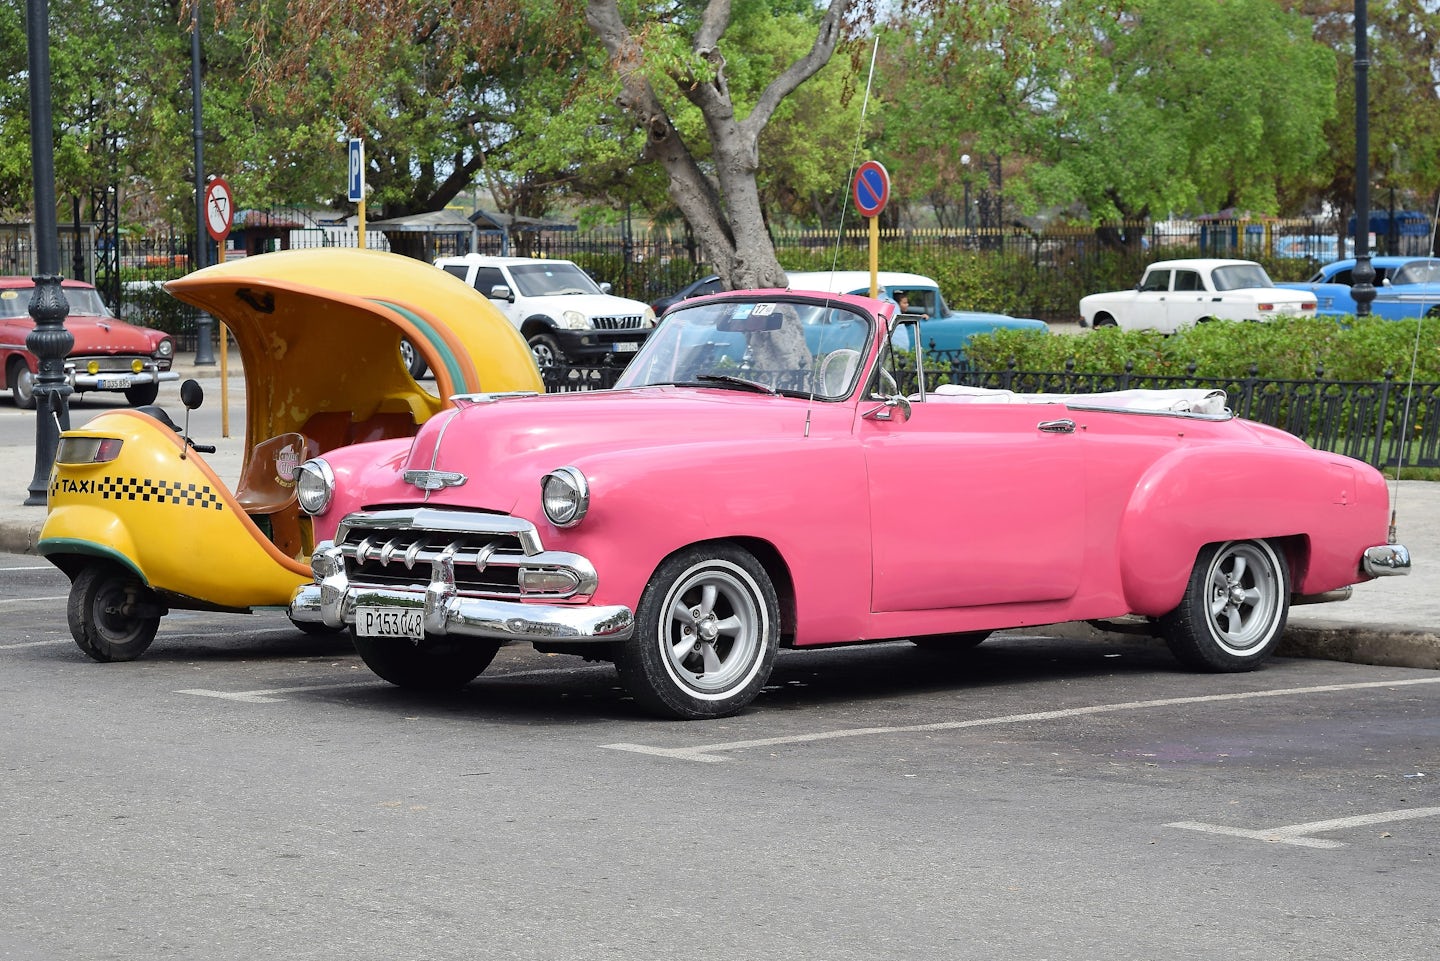 Typical Havana Transport